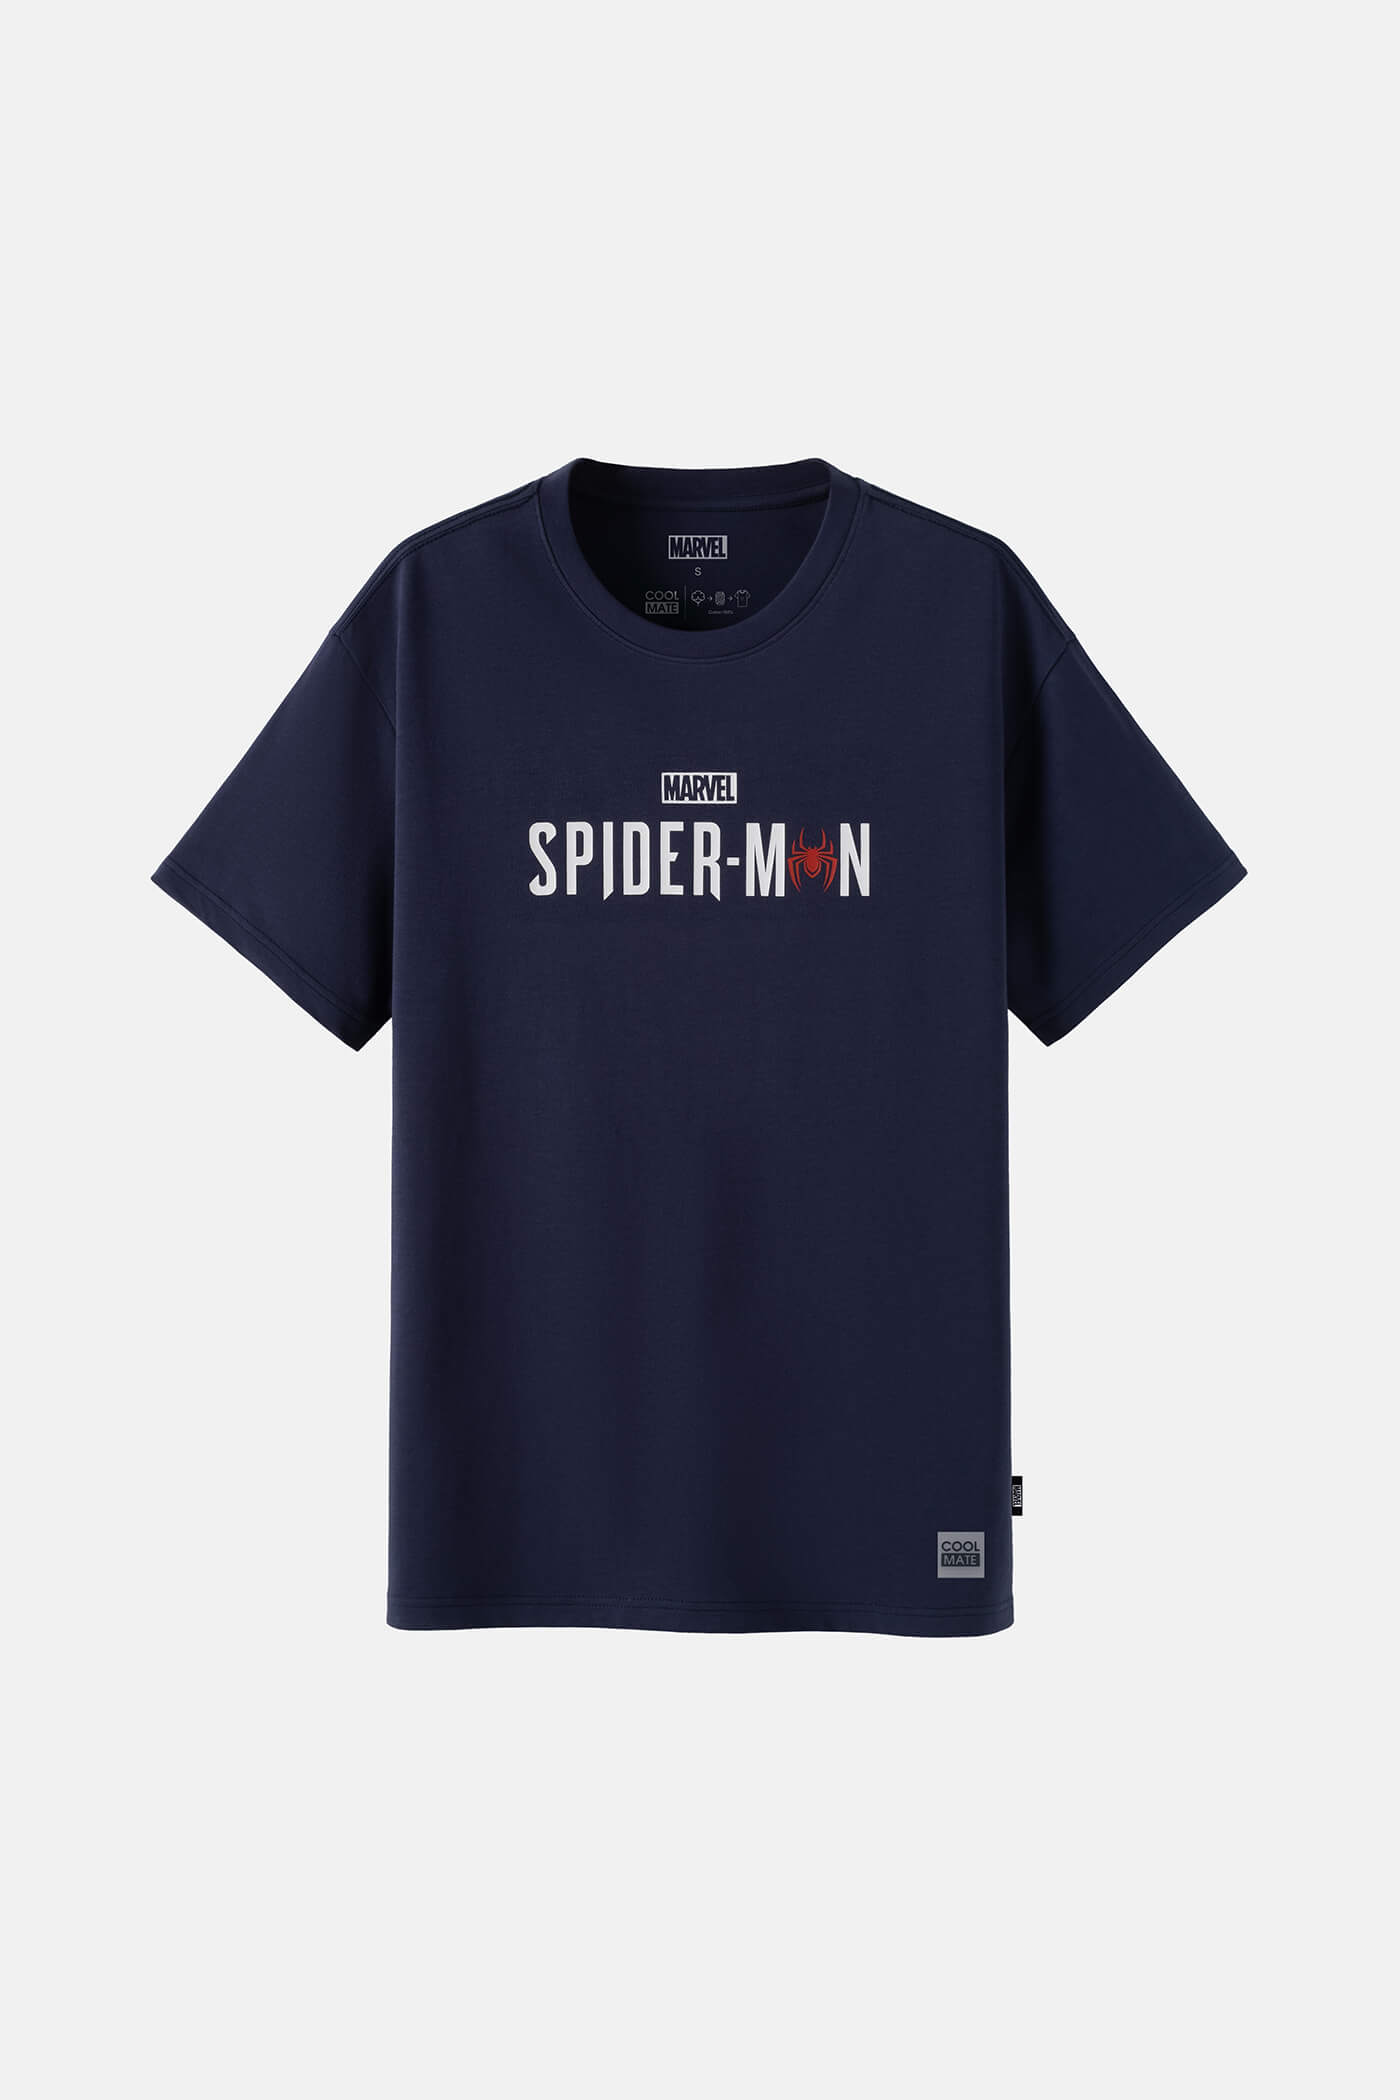 Áo thun Marvel logo Spider-Man Xanh Navy 3